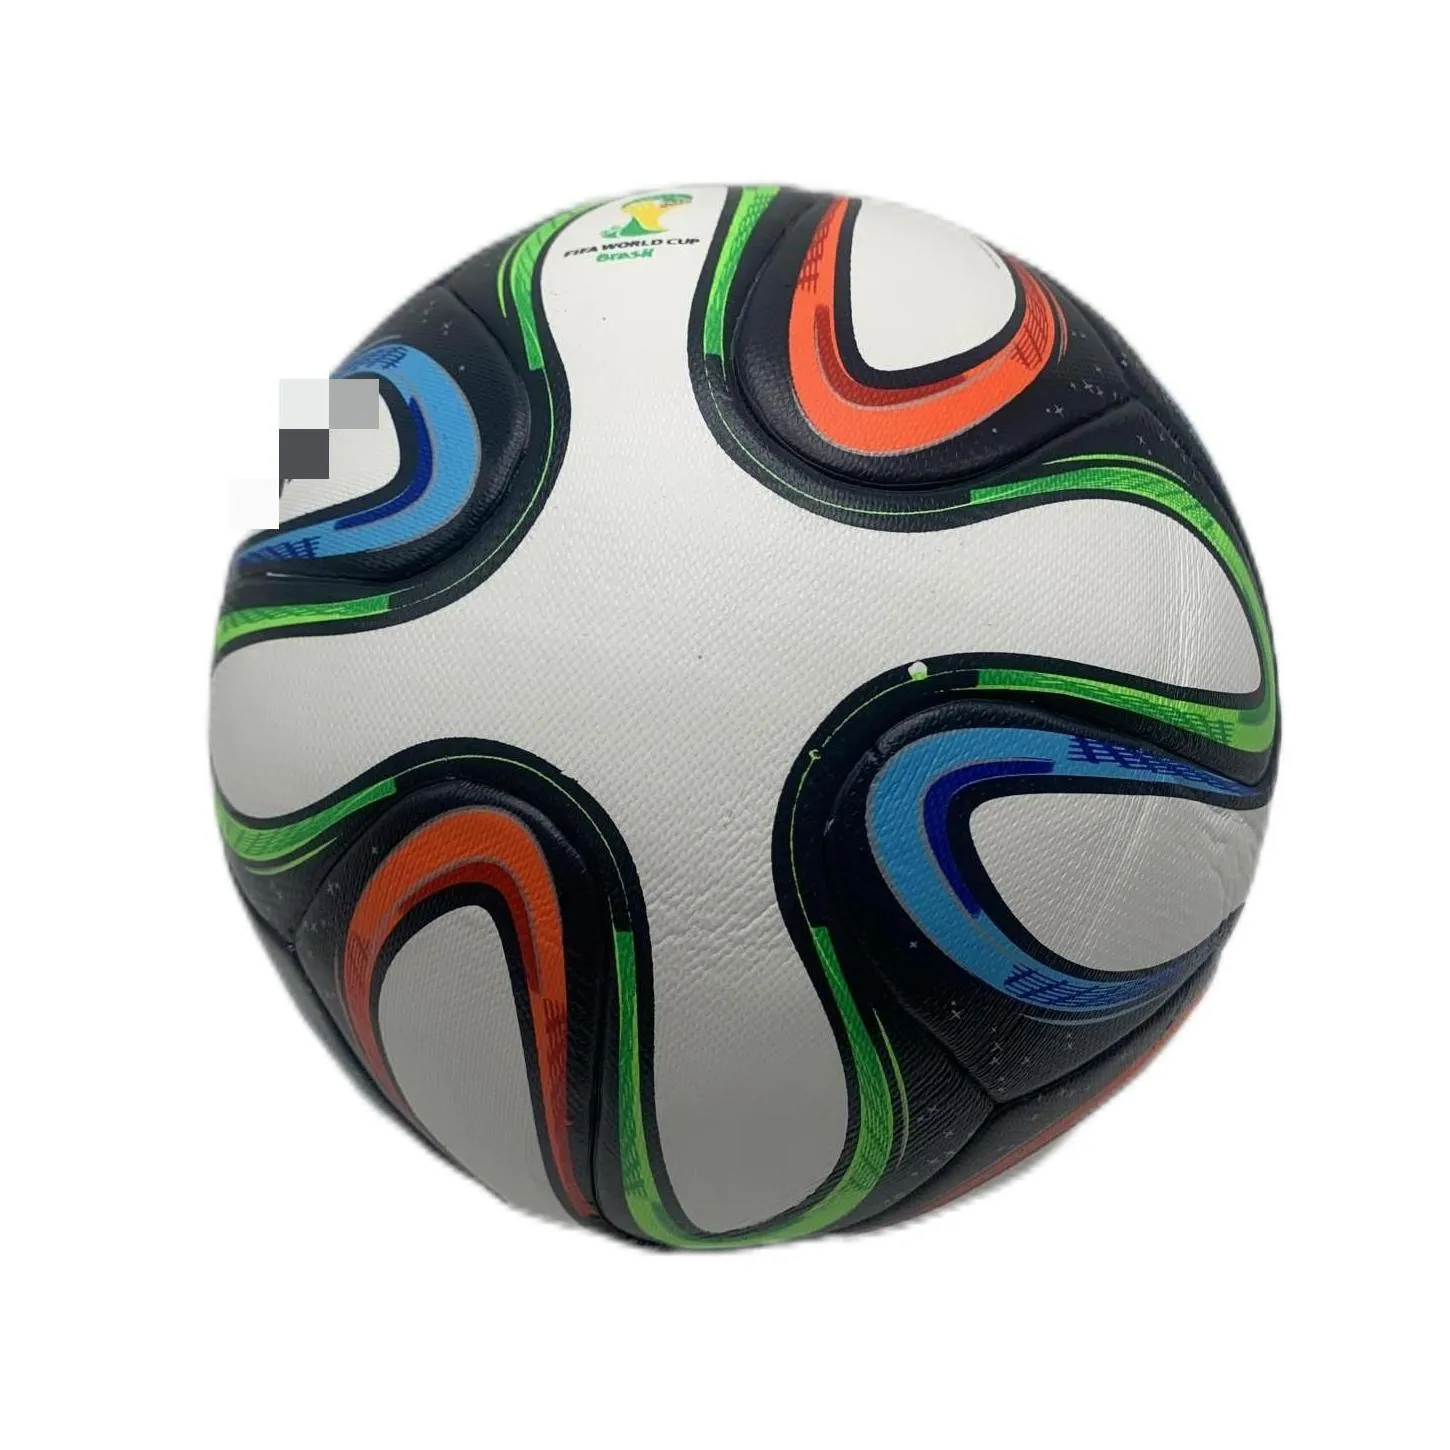 Soccer Balls Wholesale 2022 Qatar World Authentic Size 5 Match Football Veneer Material AL HILM And AL RIHLA JABULANI BRAZUCA32323